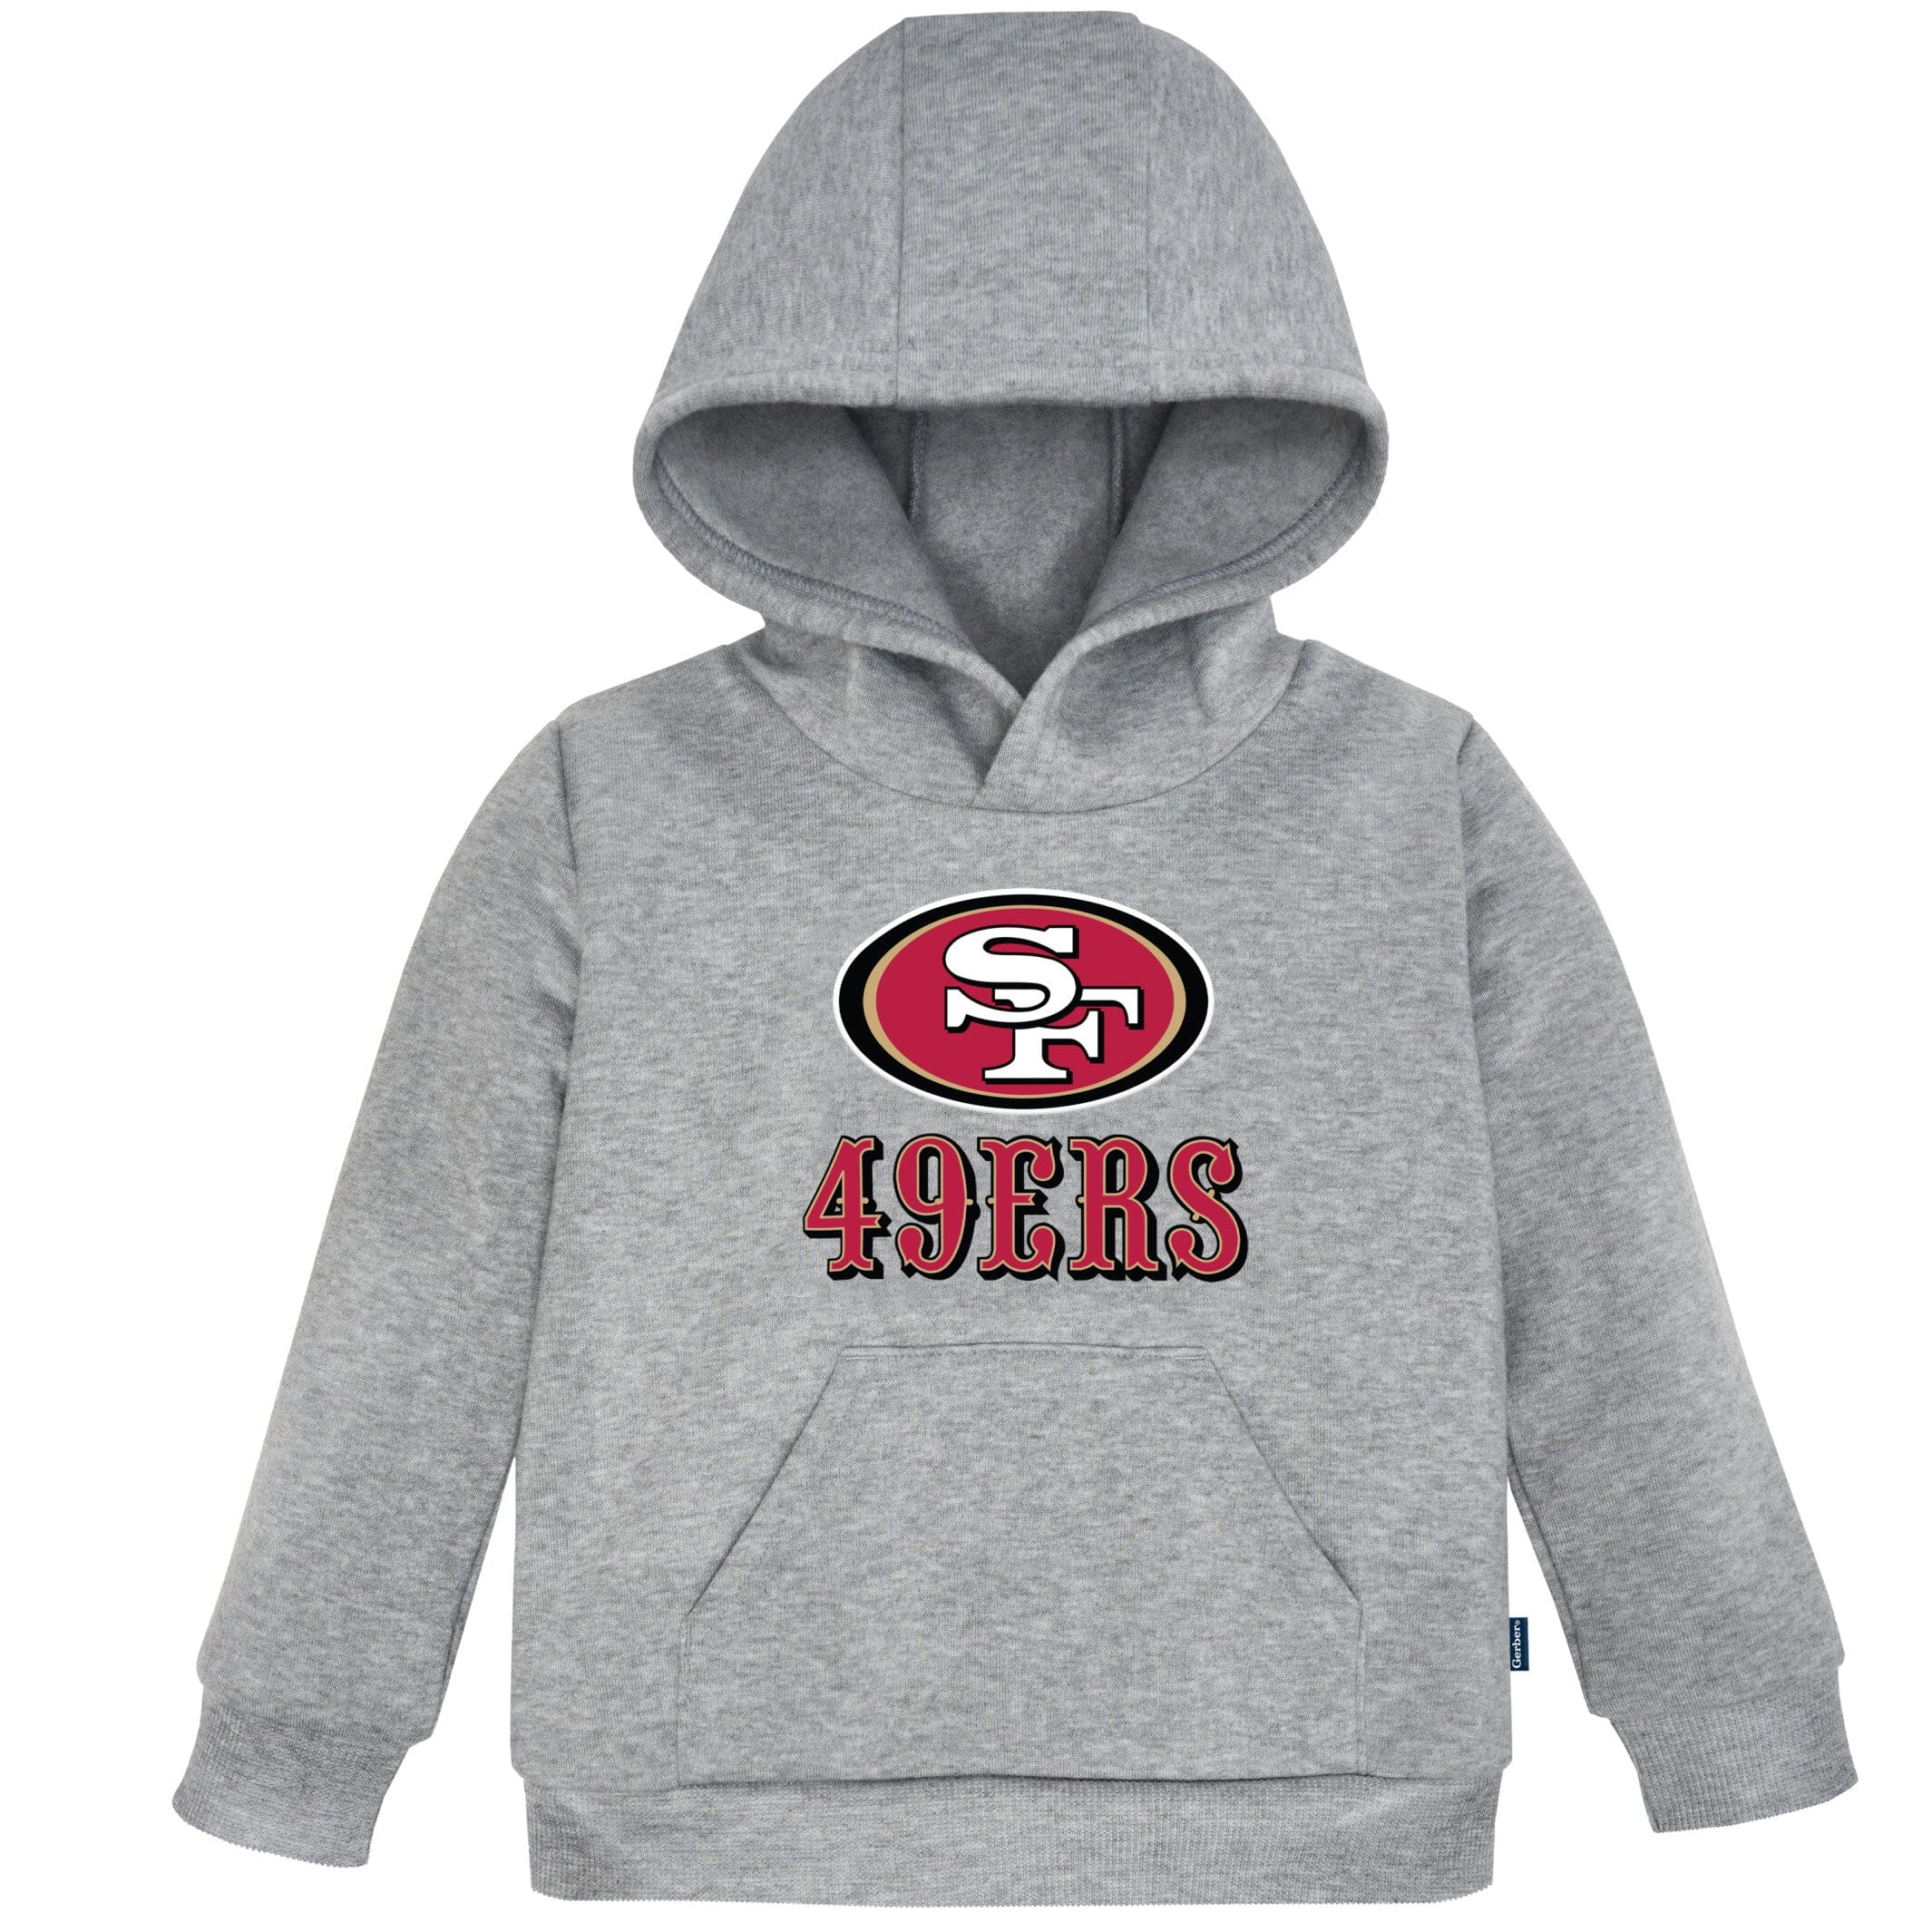 Kids San Francisco 49ers Gear, Youth 49ers Apparel, Merchandise